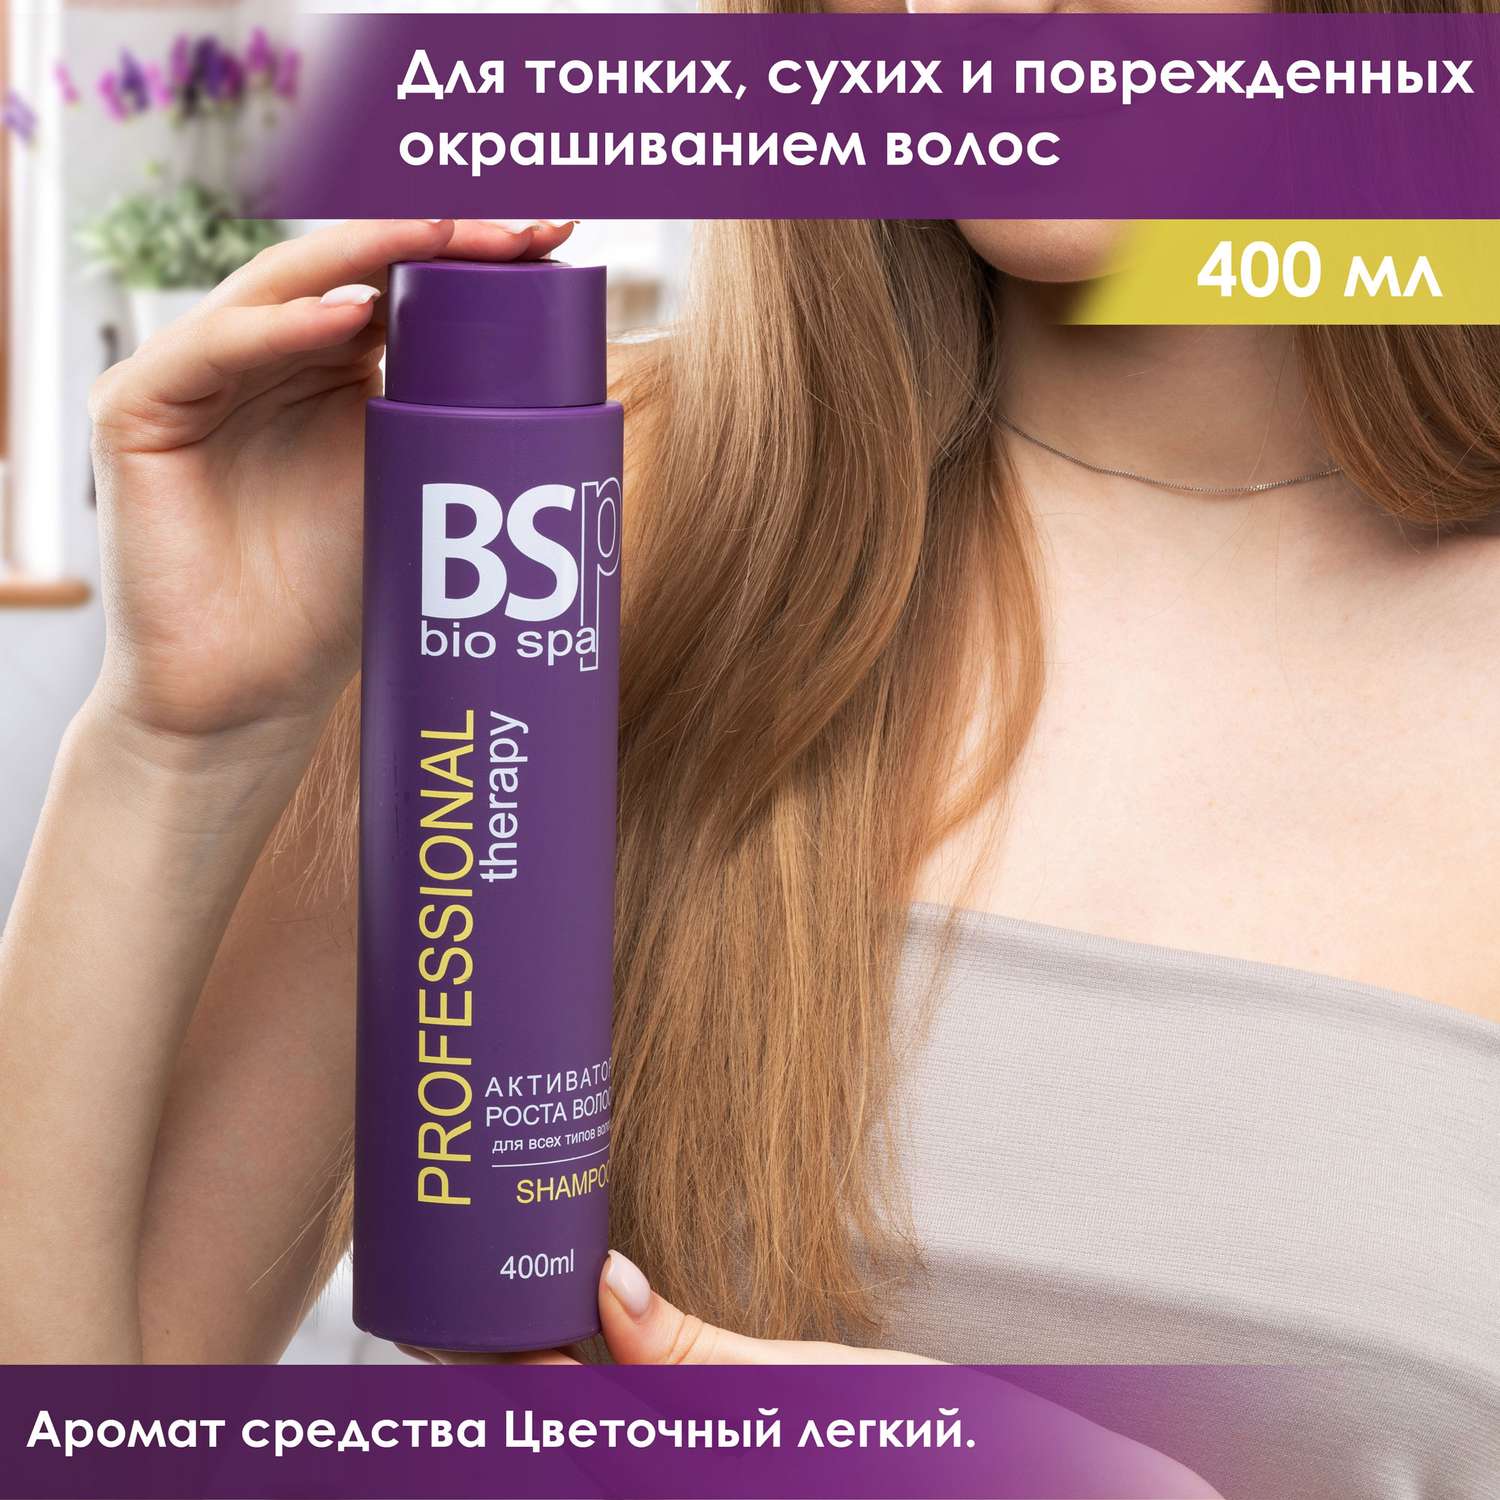 Шампунь BSP bio spa активатор роста волос 400 мл - фото 2